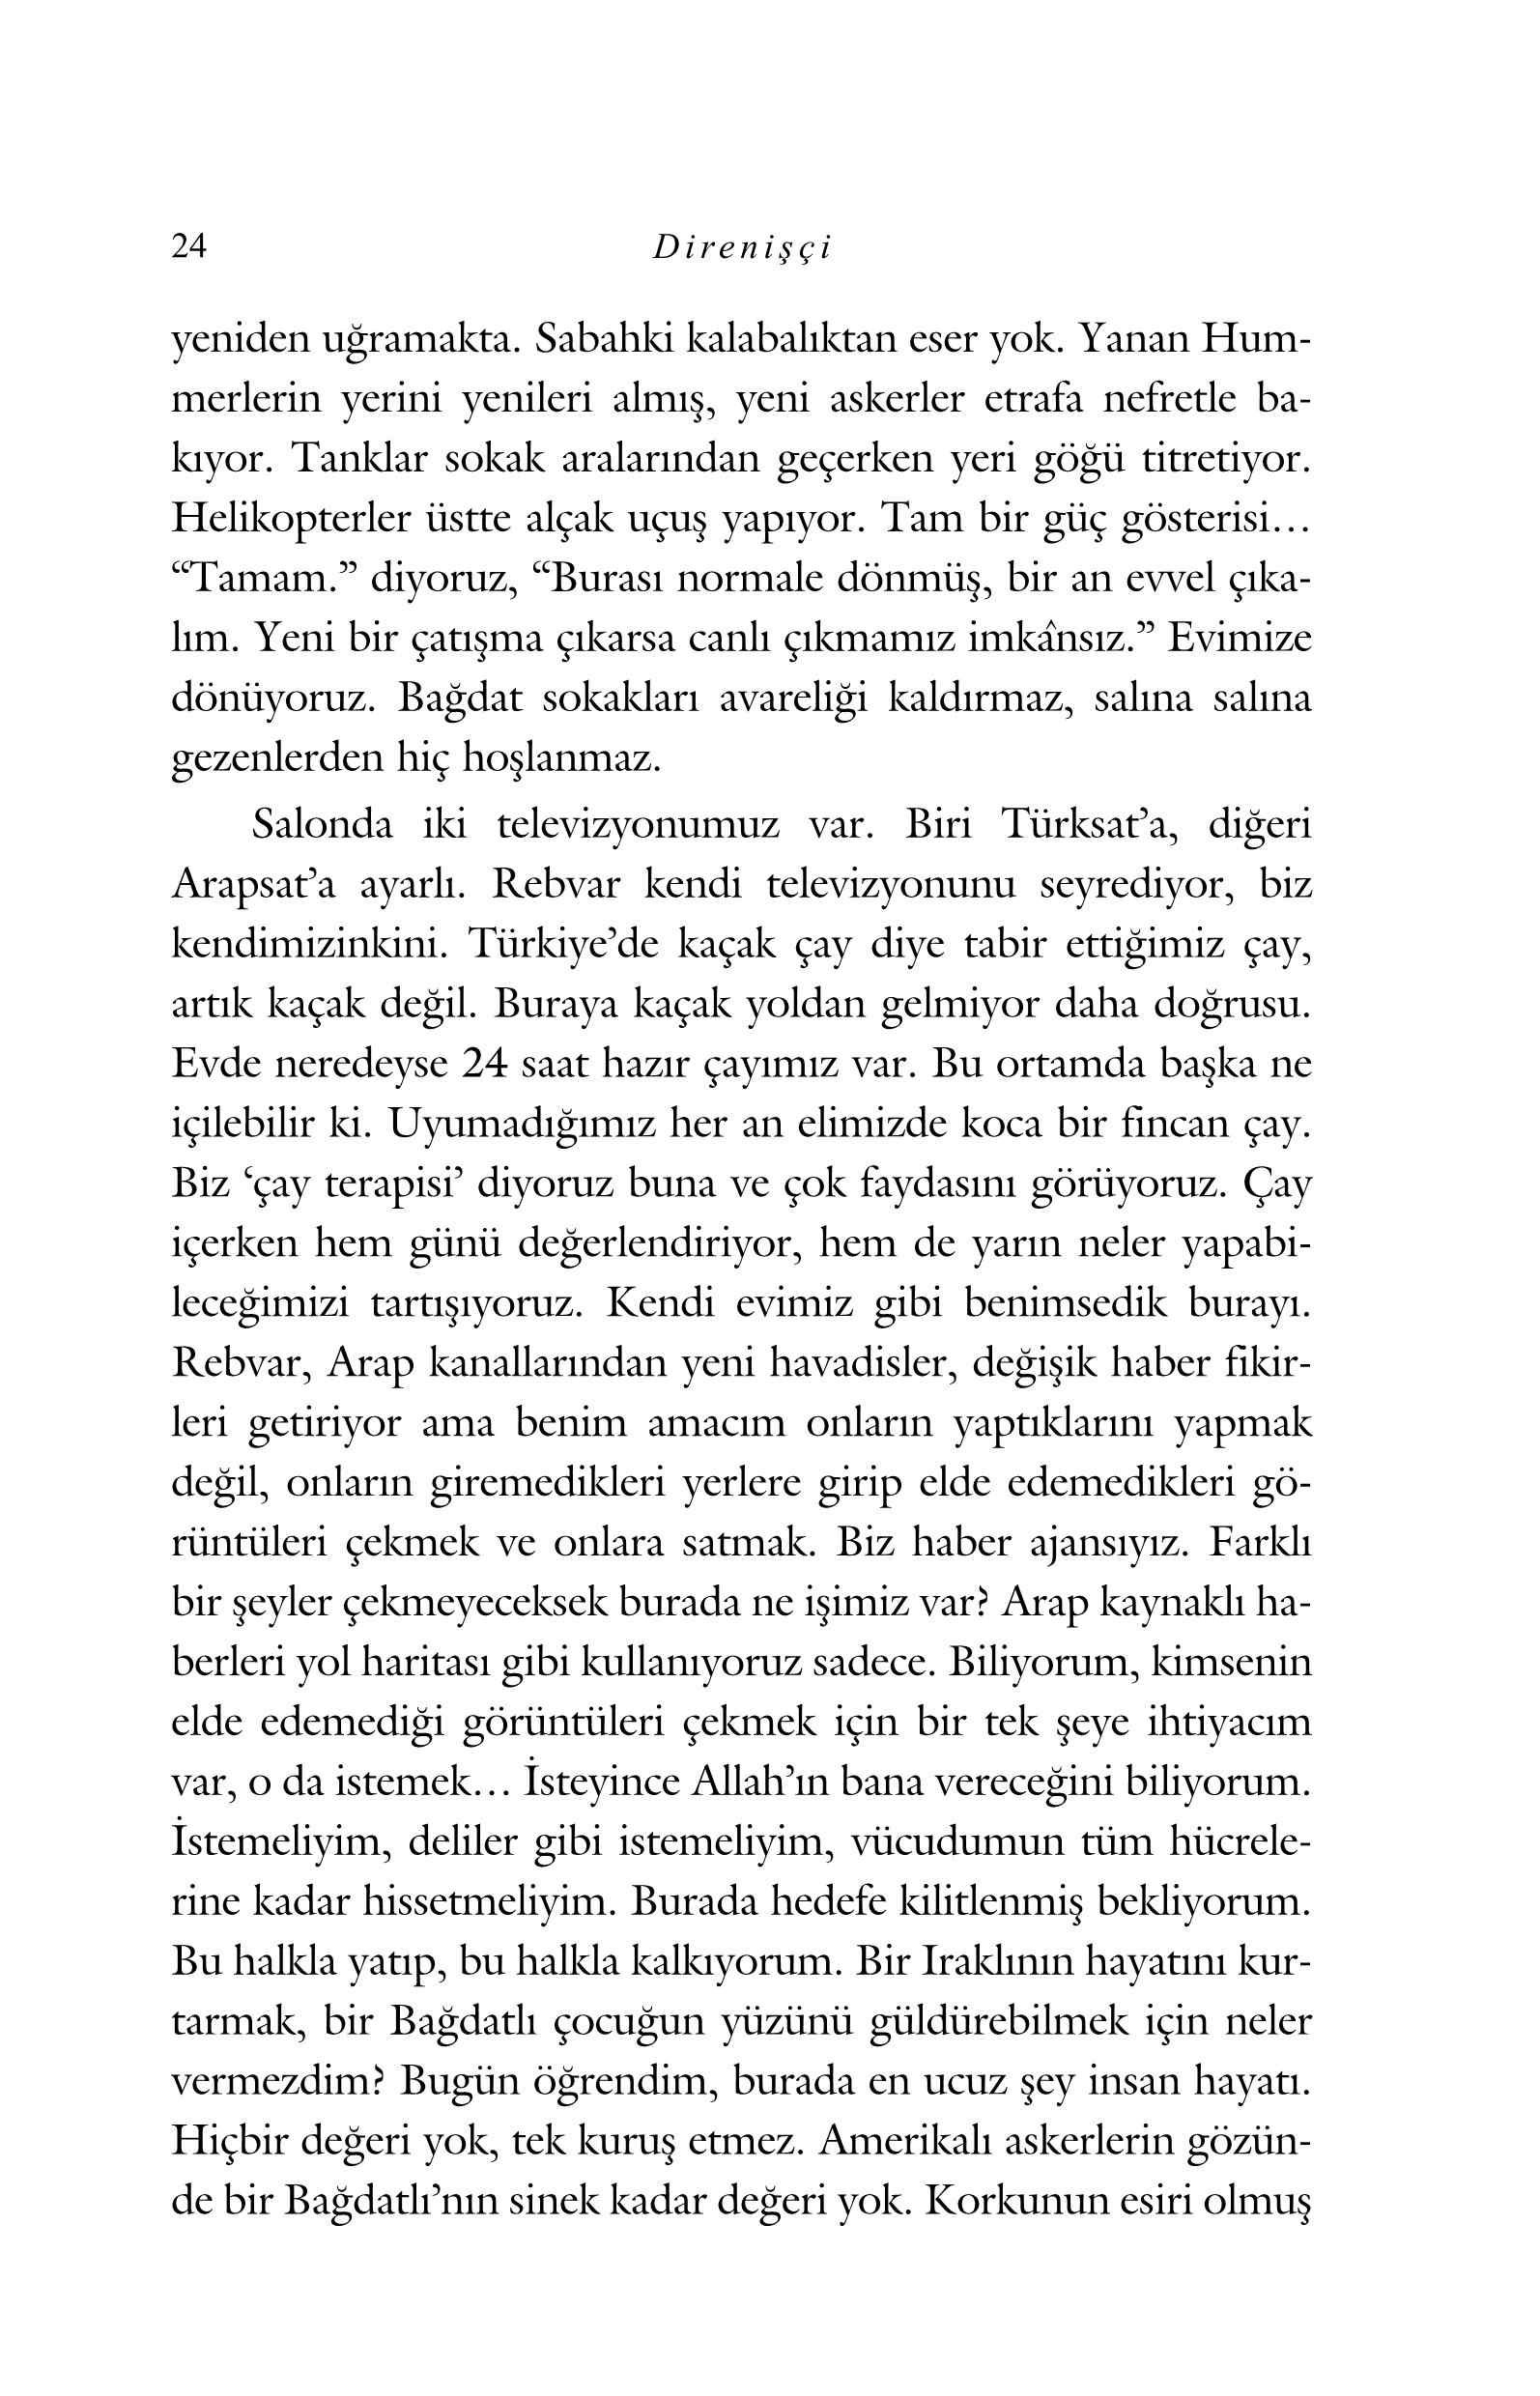 Mucahit Akagunduz - Direnisci (Irak Savasinin Ortasinda) - KaynakYayinlari.pdf, 173-Sayfa 